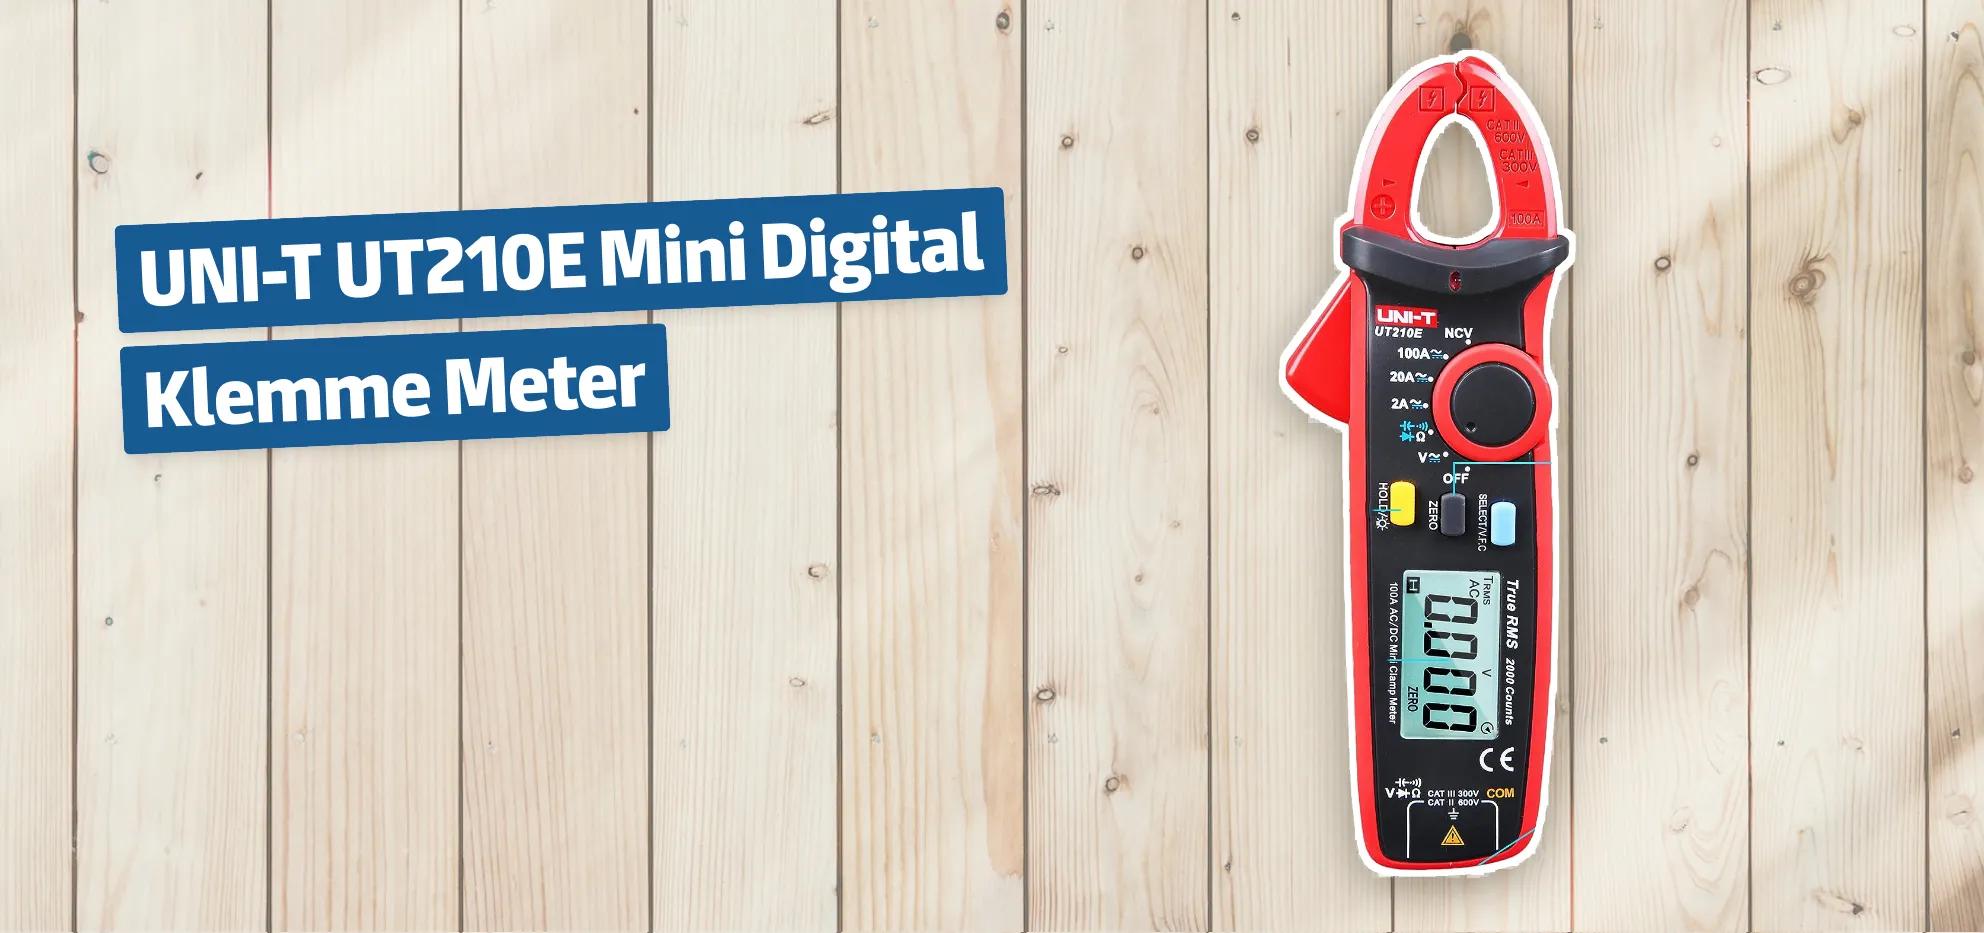 UNI-T UT210E Mini Digital Klemme Meter